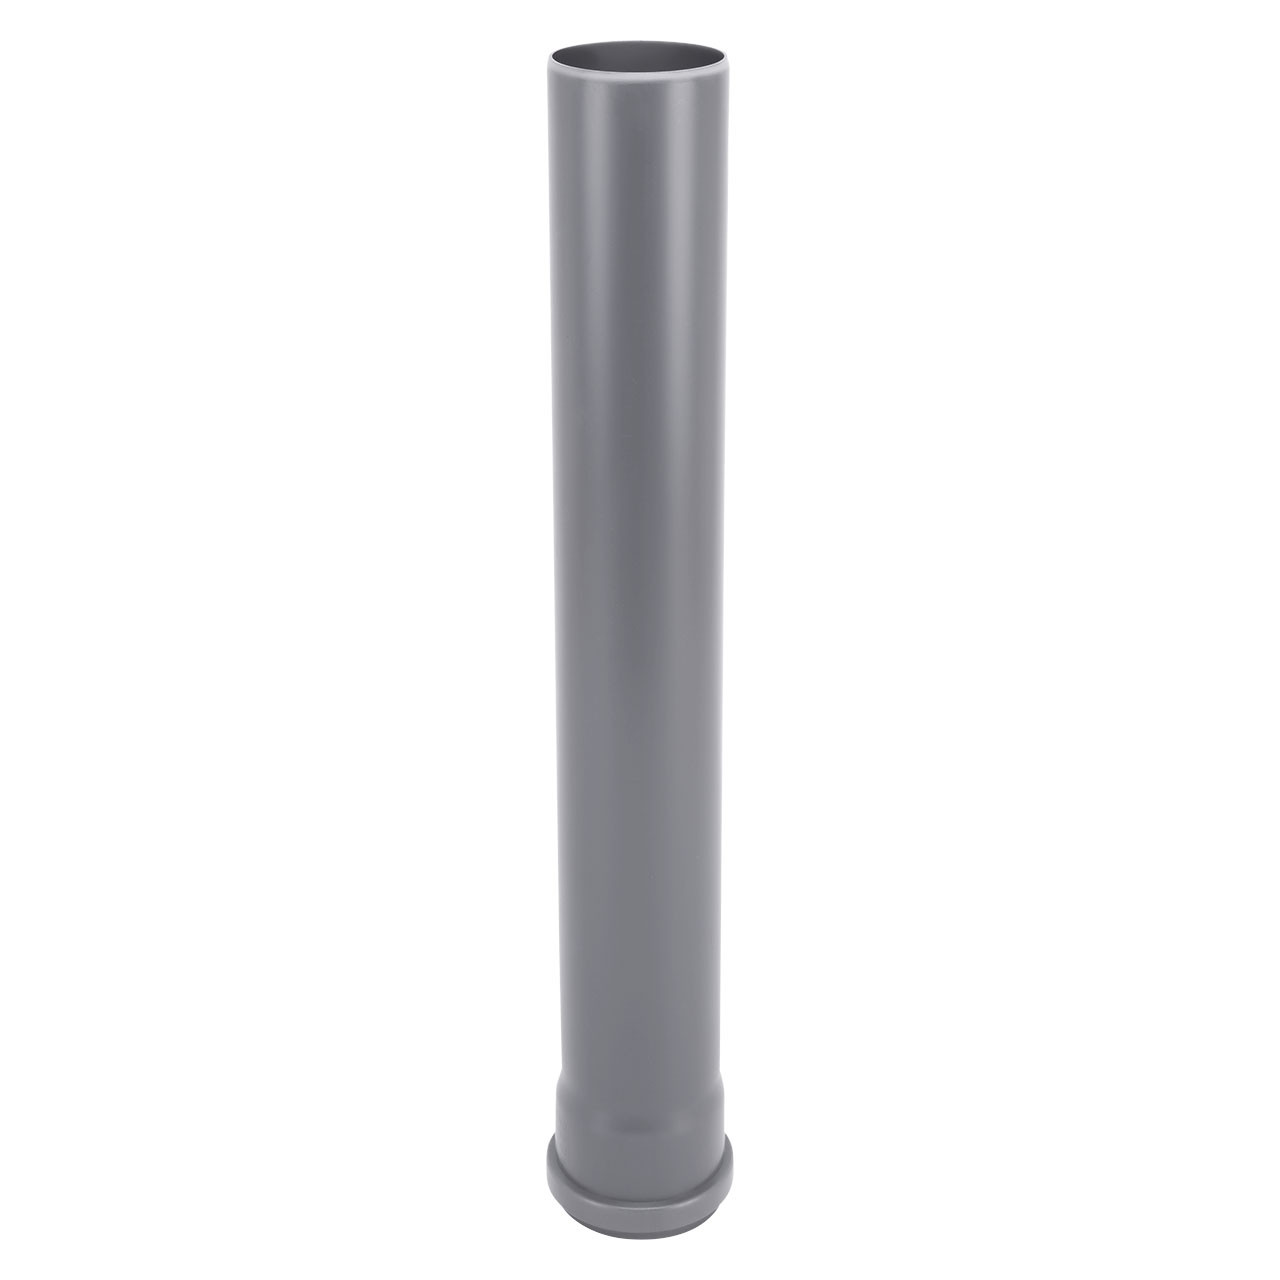 HT-Rohr DN 75 - 500 mm lang (4005046820236)